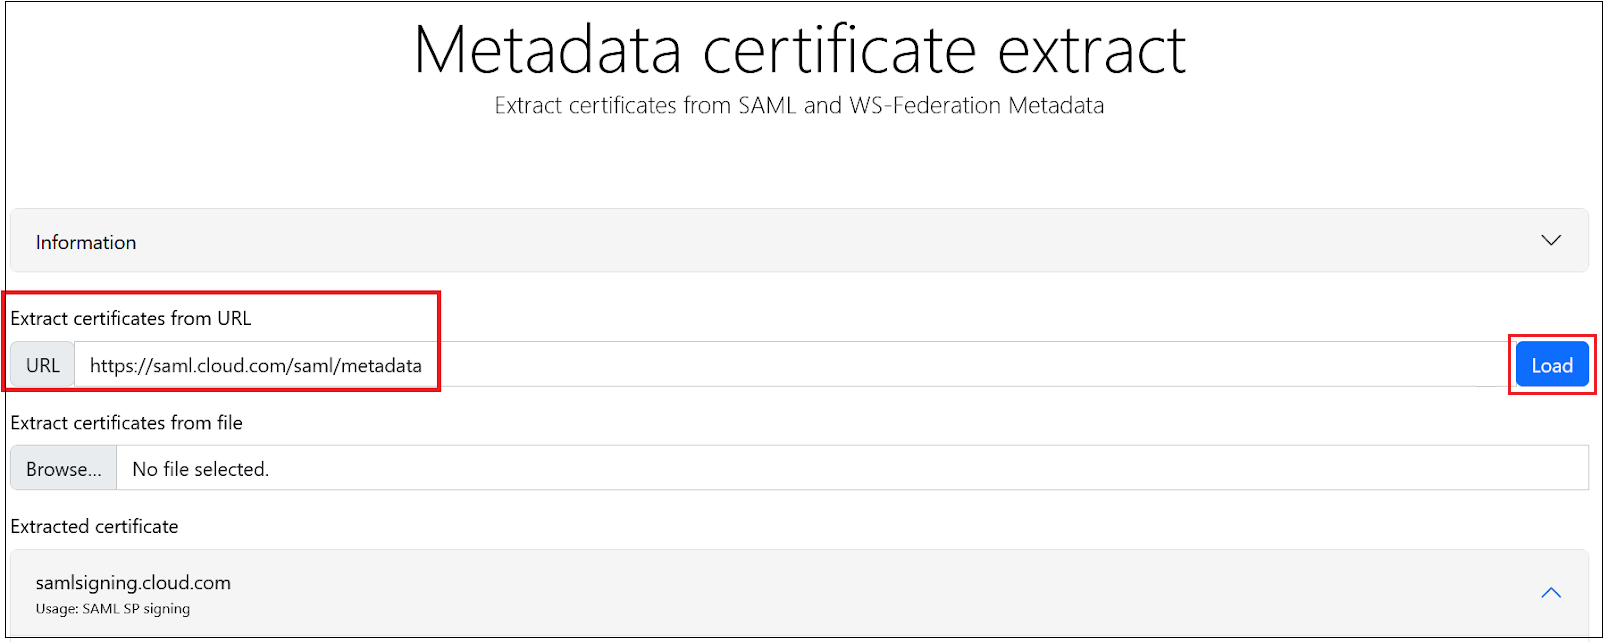 Metadata certificate extract